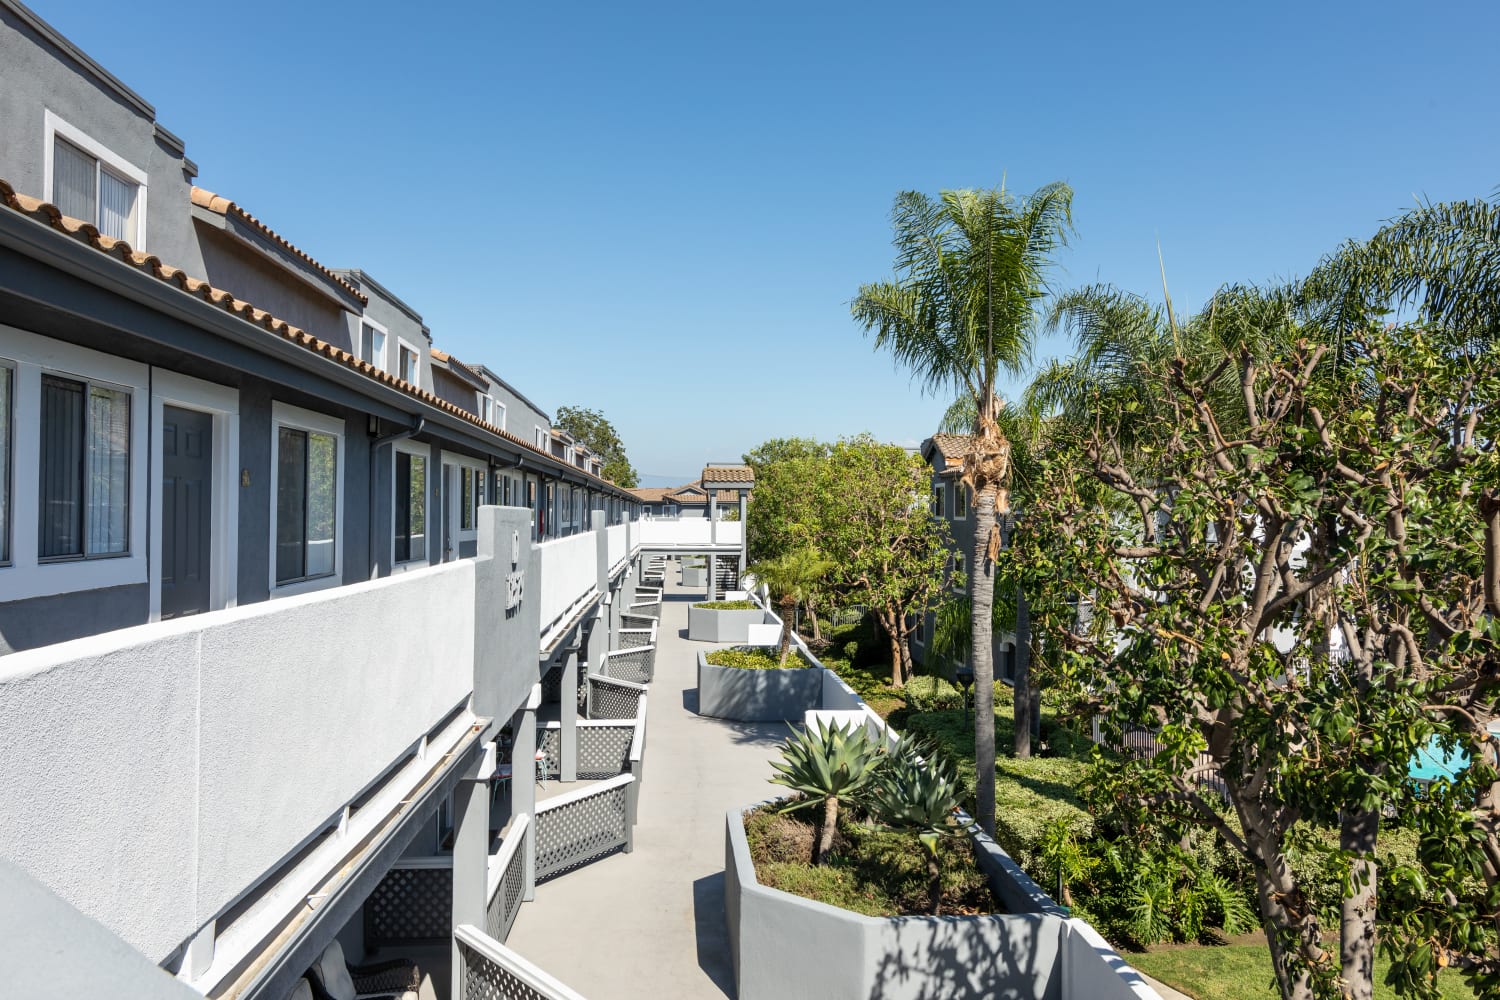 Apartments at Emerald Ridge in Garden Grove, California